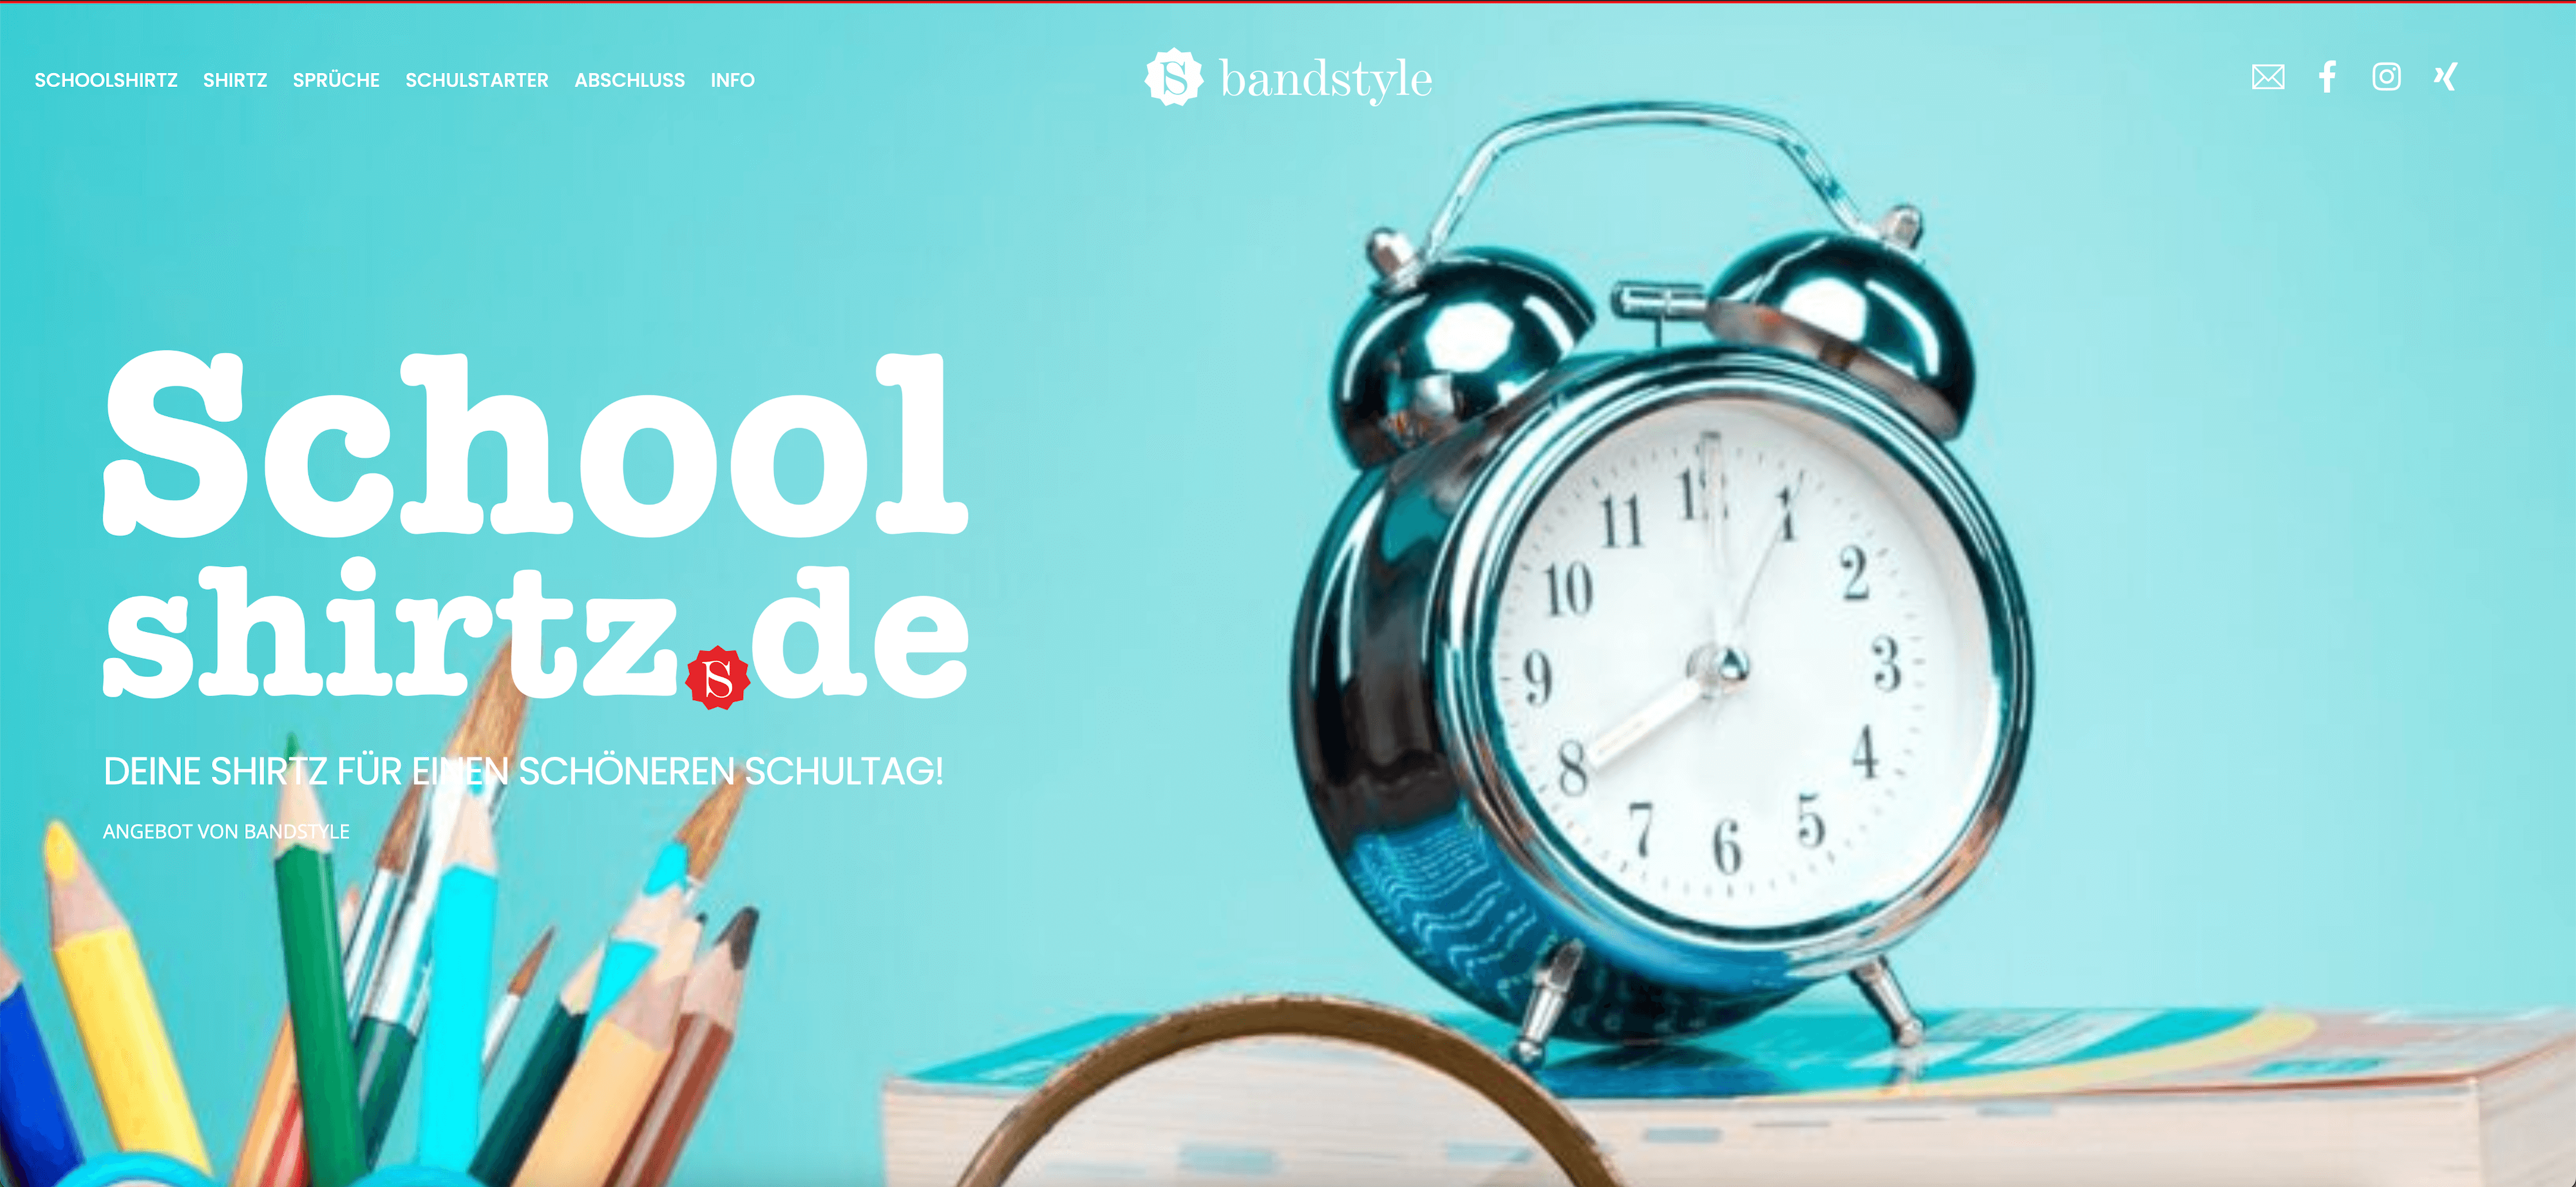 Bandstyle-Schoolshirtz-abishirtz-06